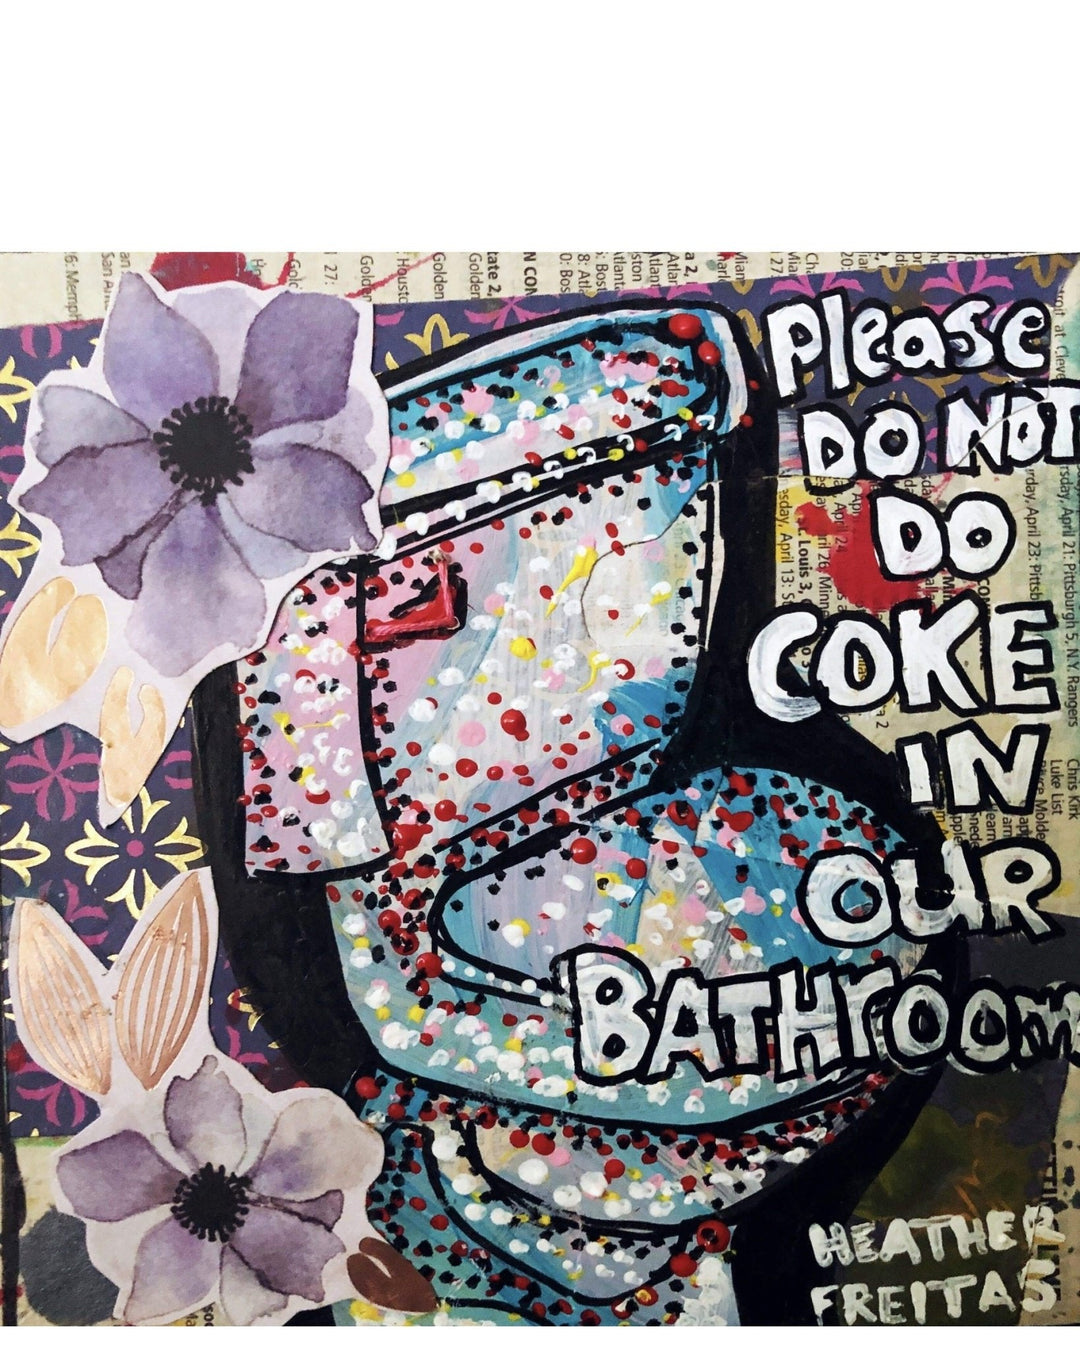 Please Do Not Do Coke In The Bathroom - Heather Freitas 